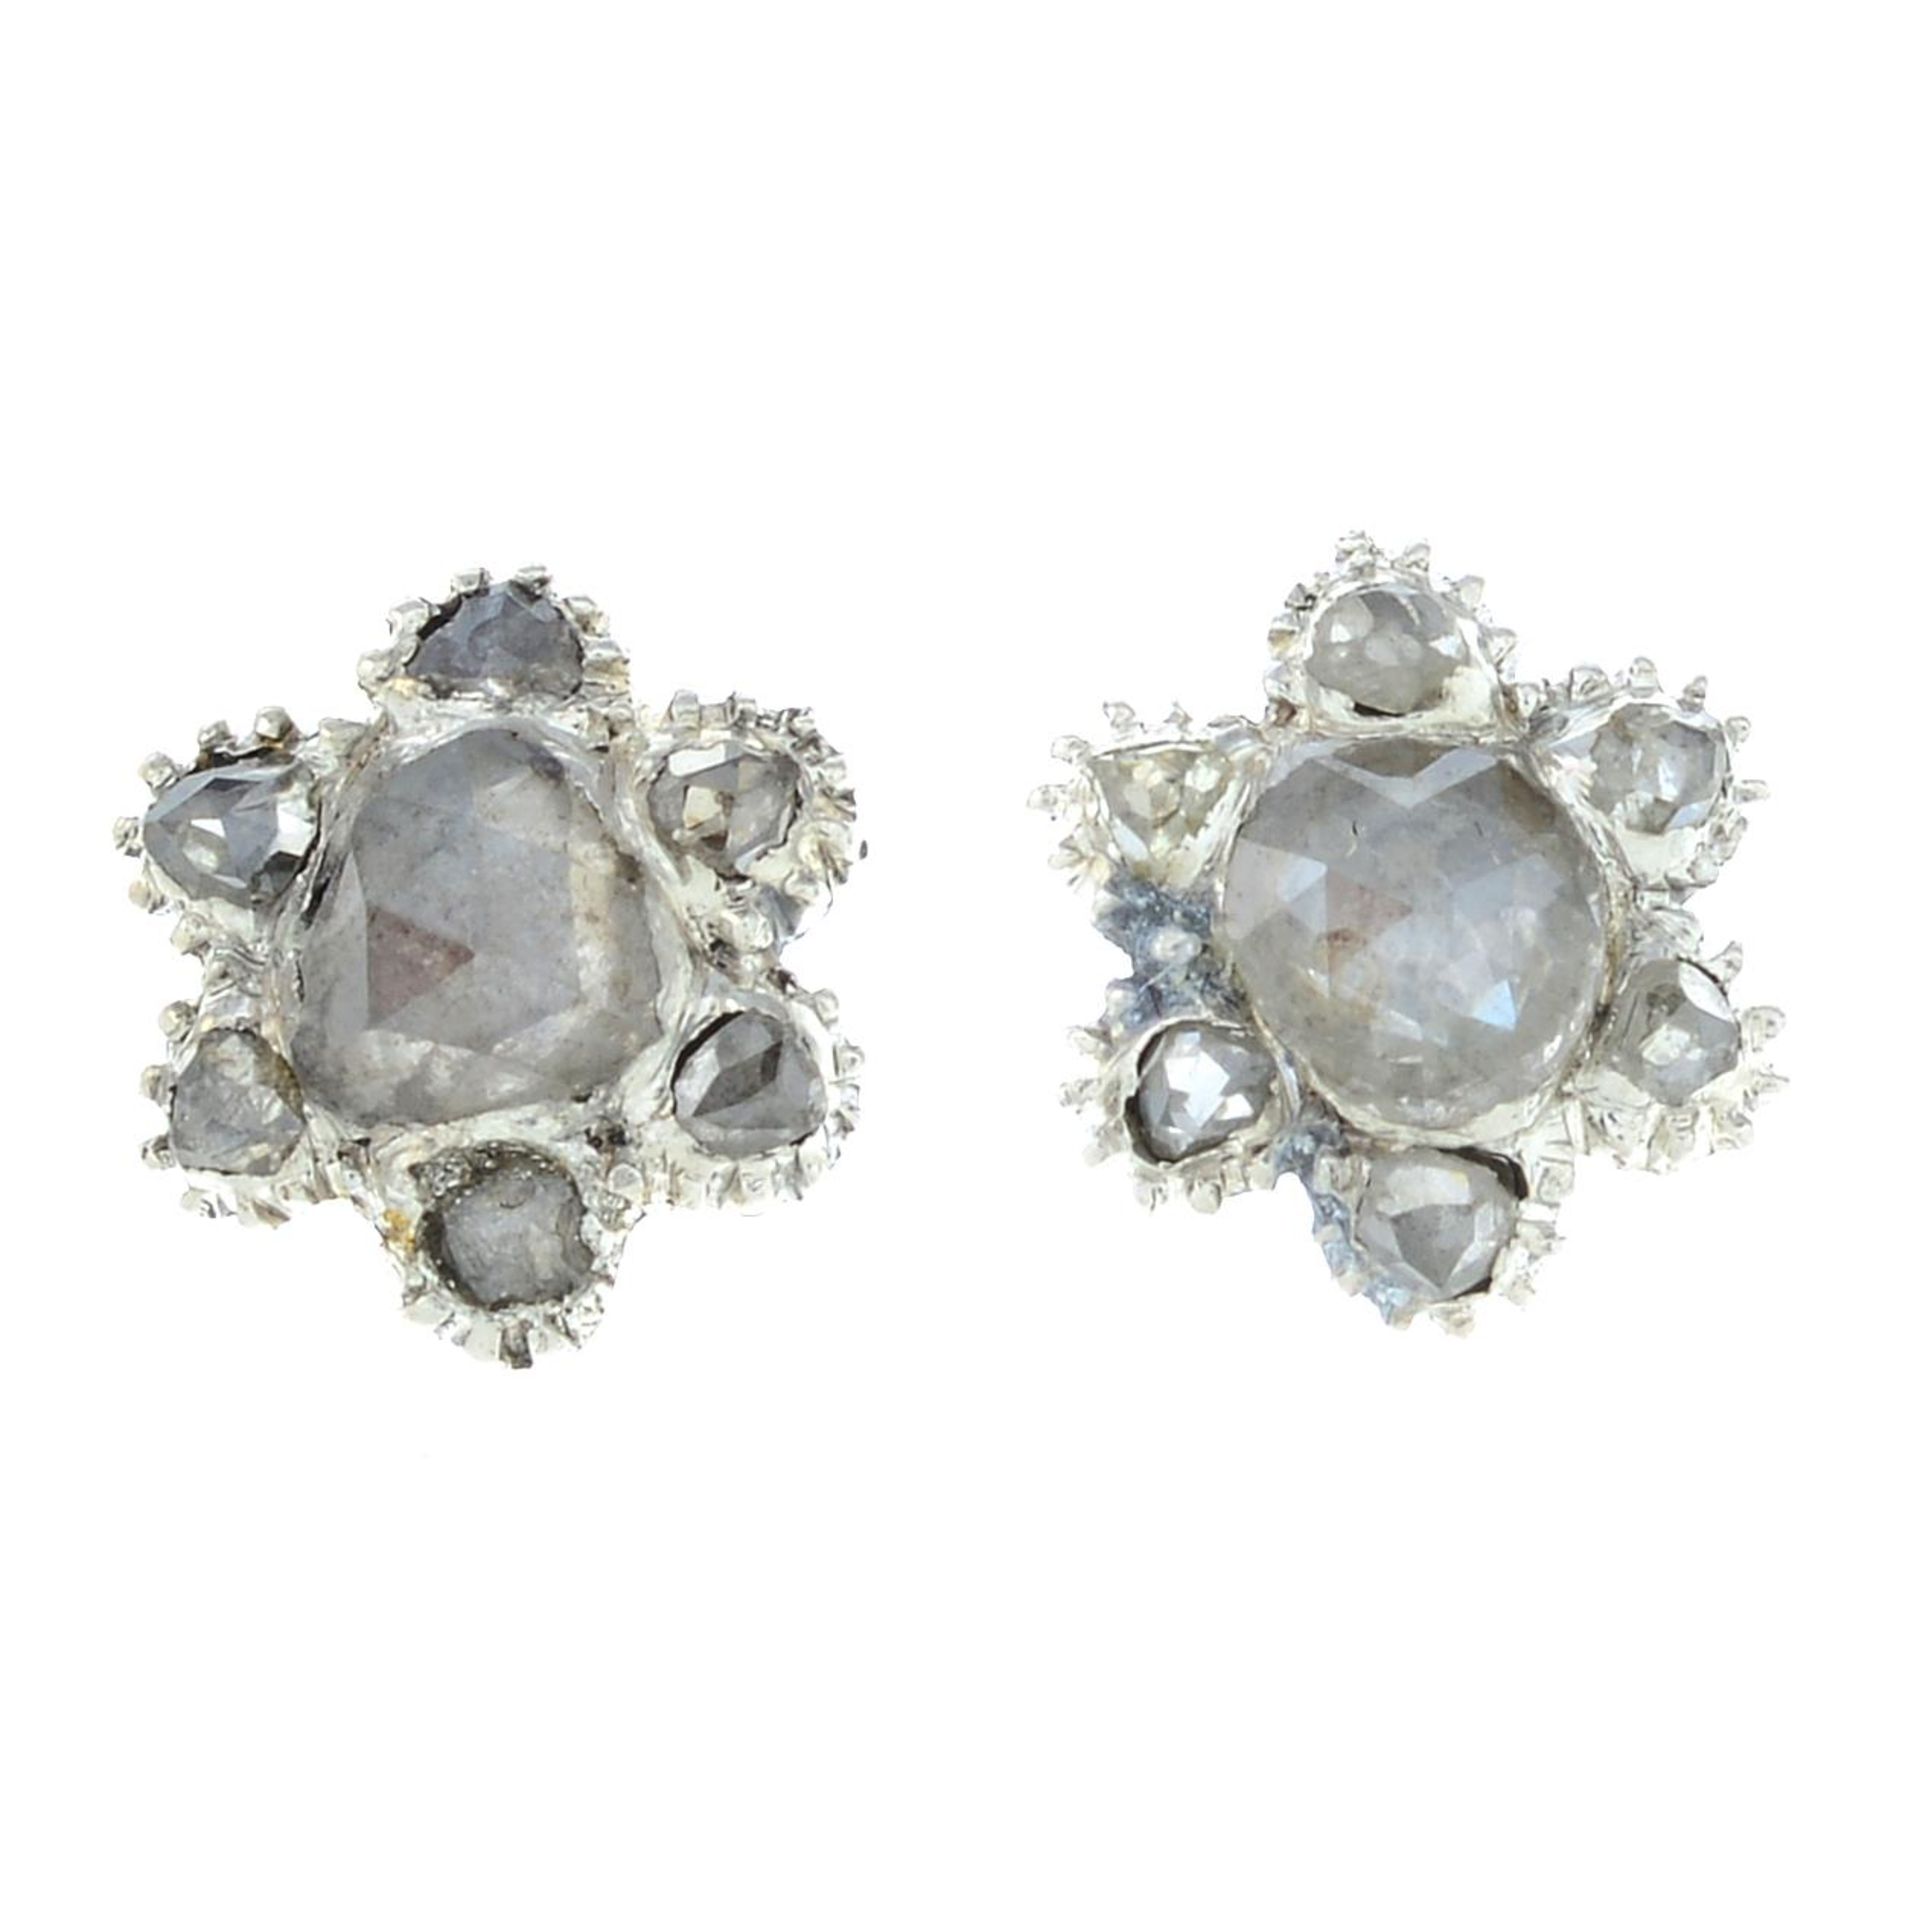 A pair of rose-cut floral cluster stud earrings.Fittings stamped 375.